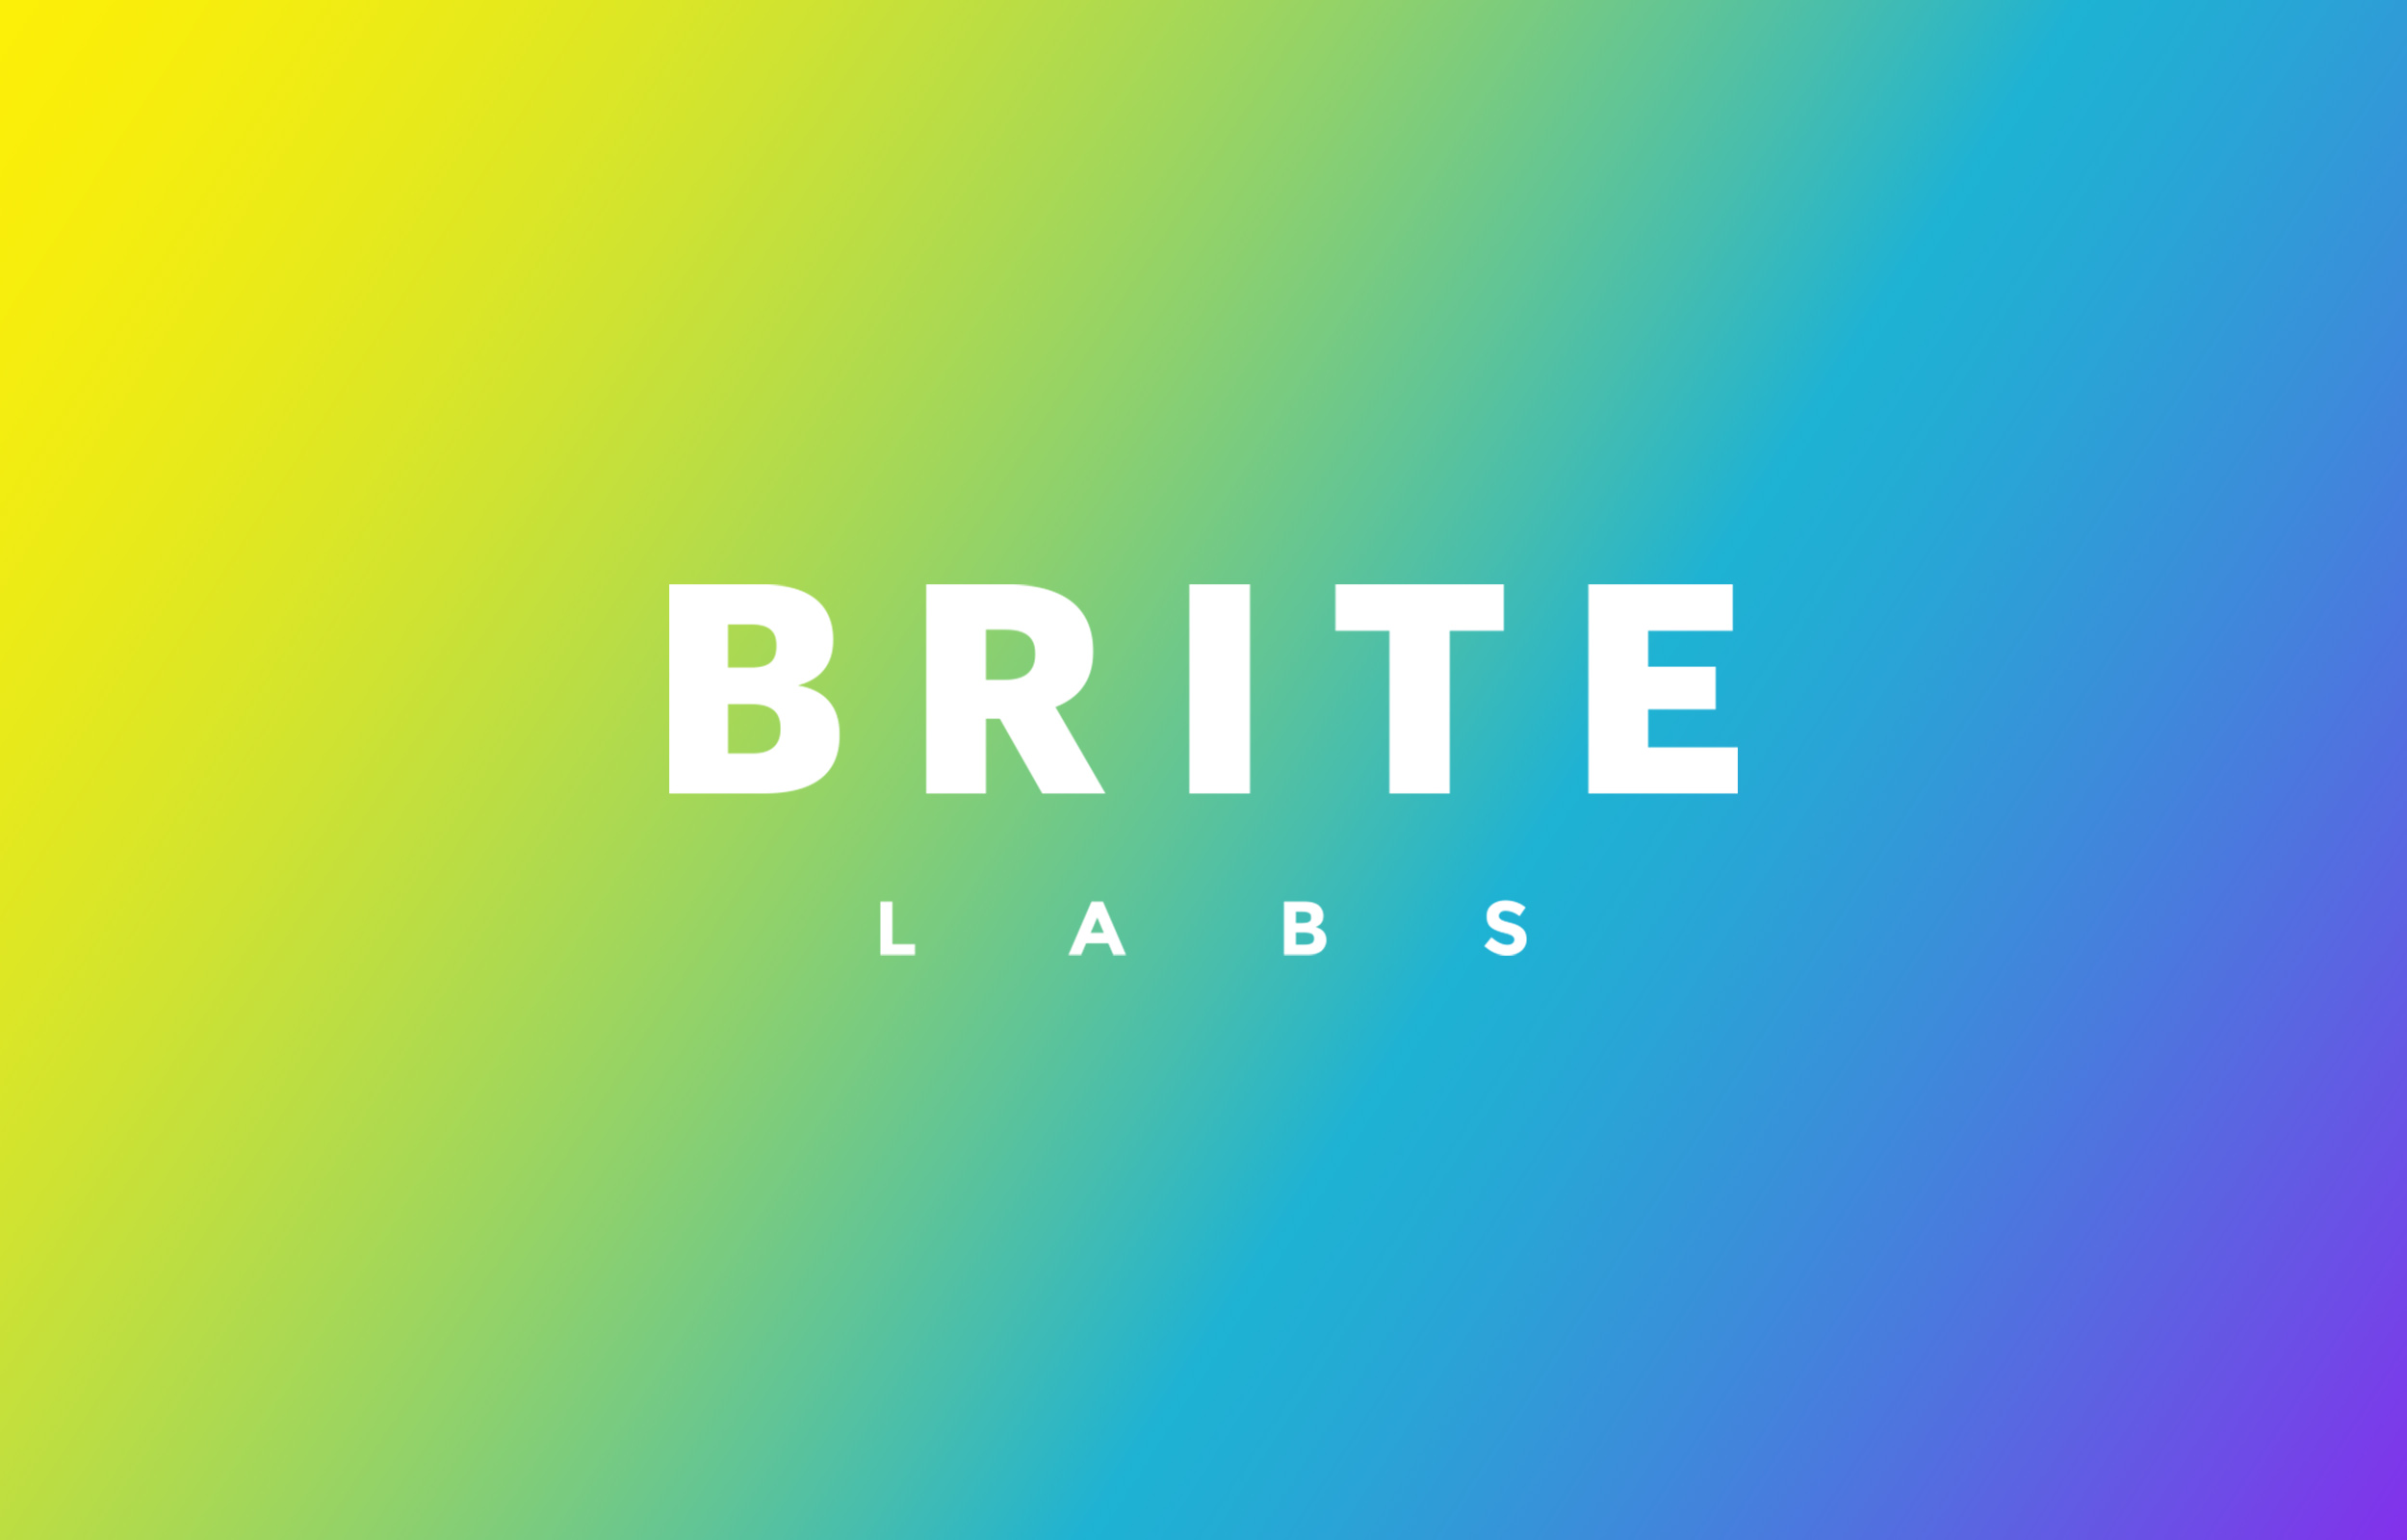 BRITE Labs